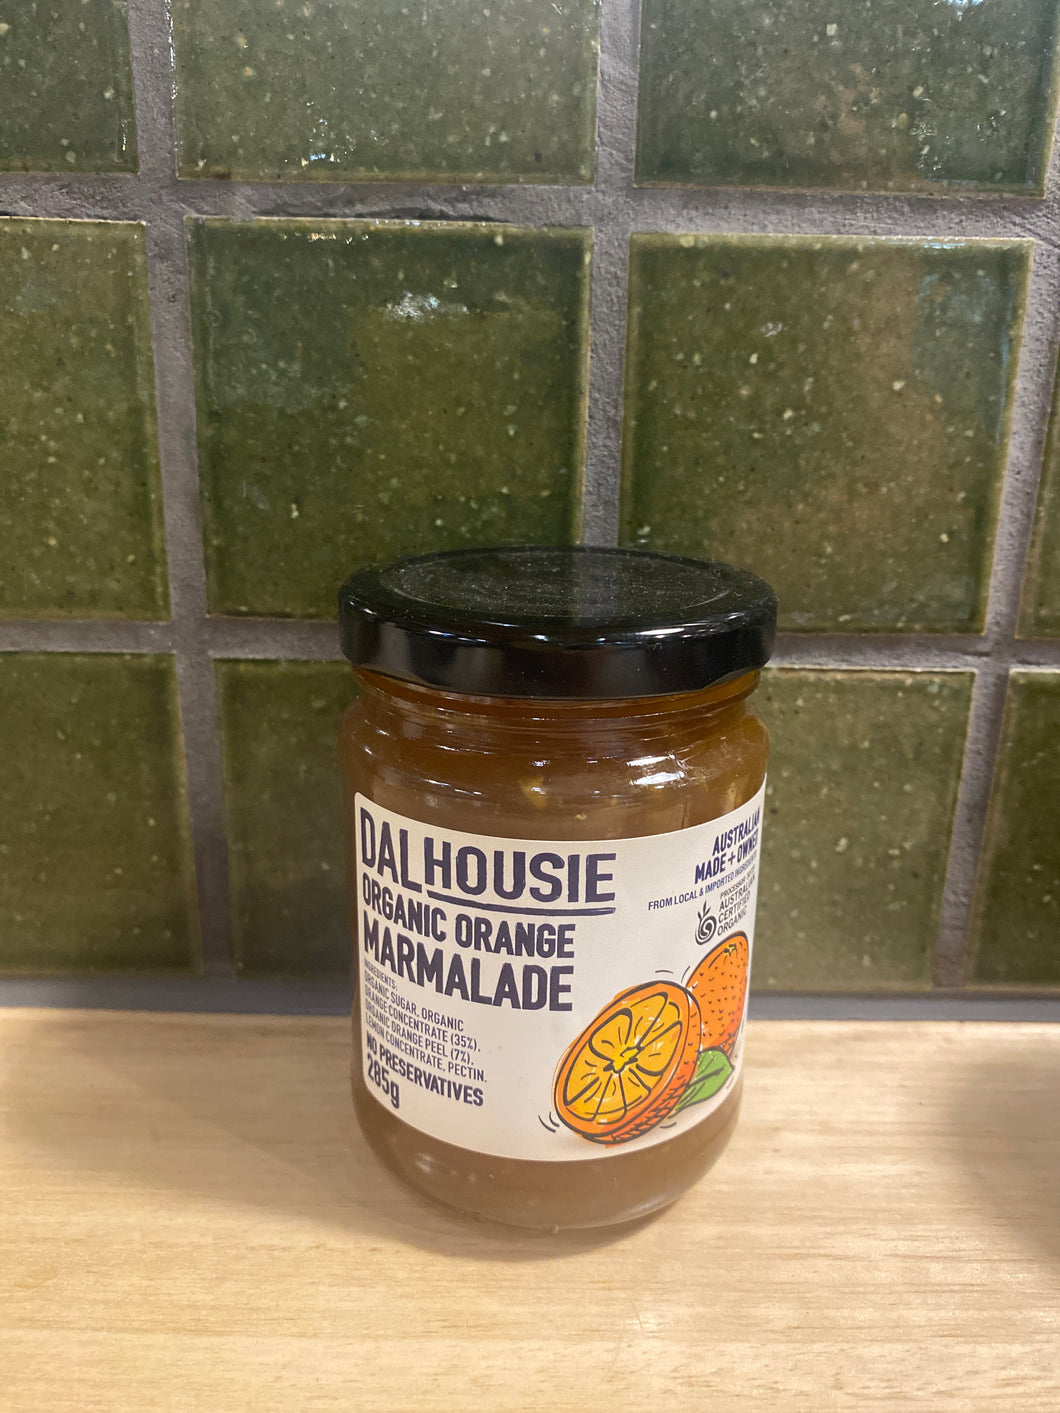 Dalhousie Orange Marmalade 285g